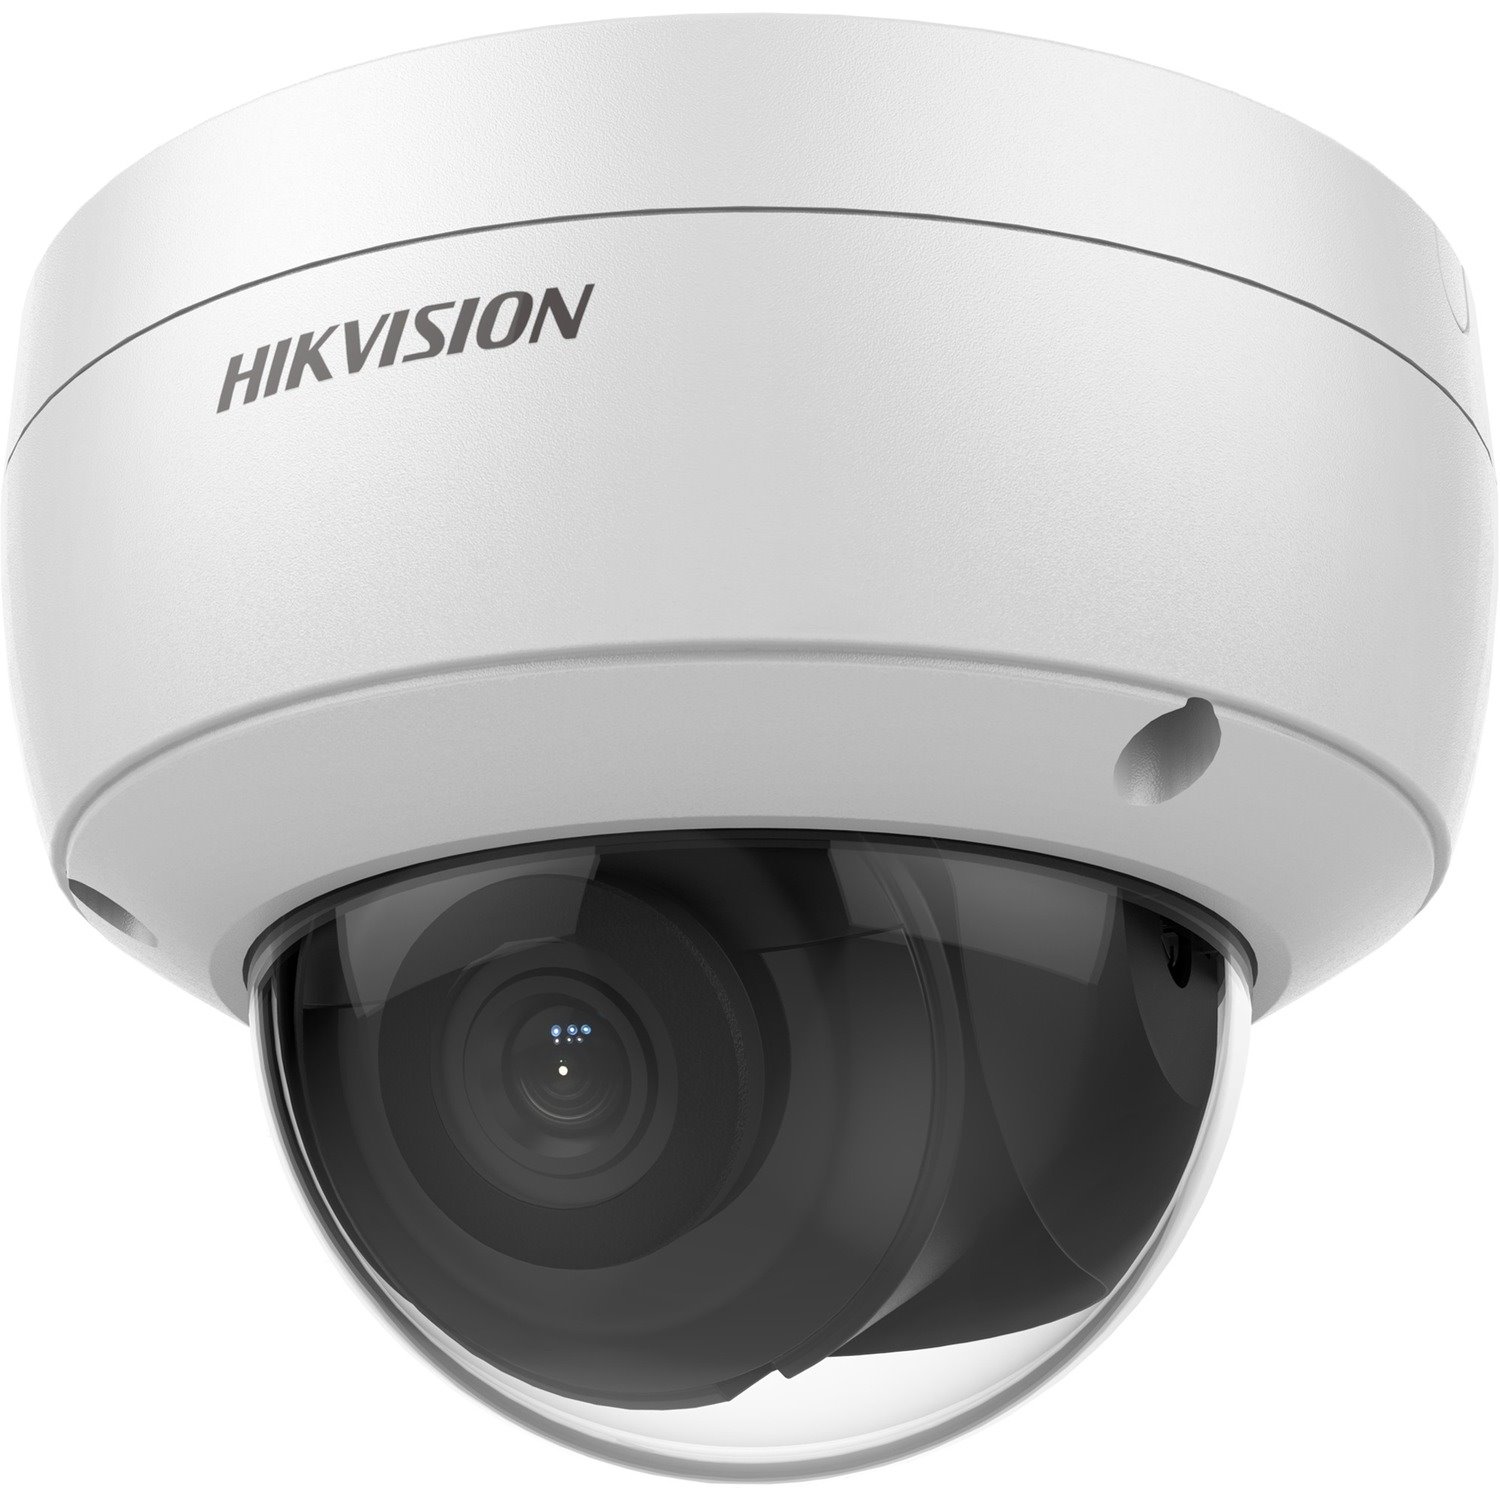 Hikvision AcuSense PCI-D15F2S 5 Megapixel Outdoor Network Camera - Color - Dome